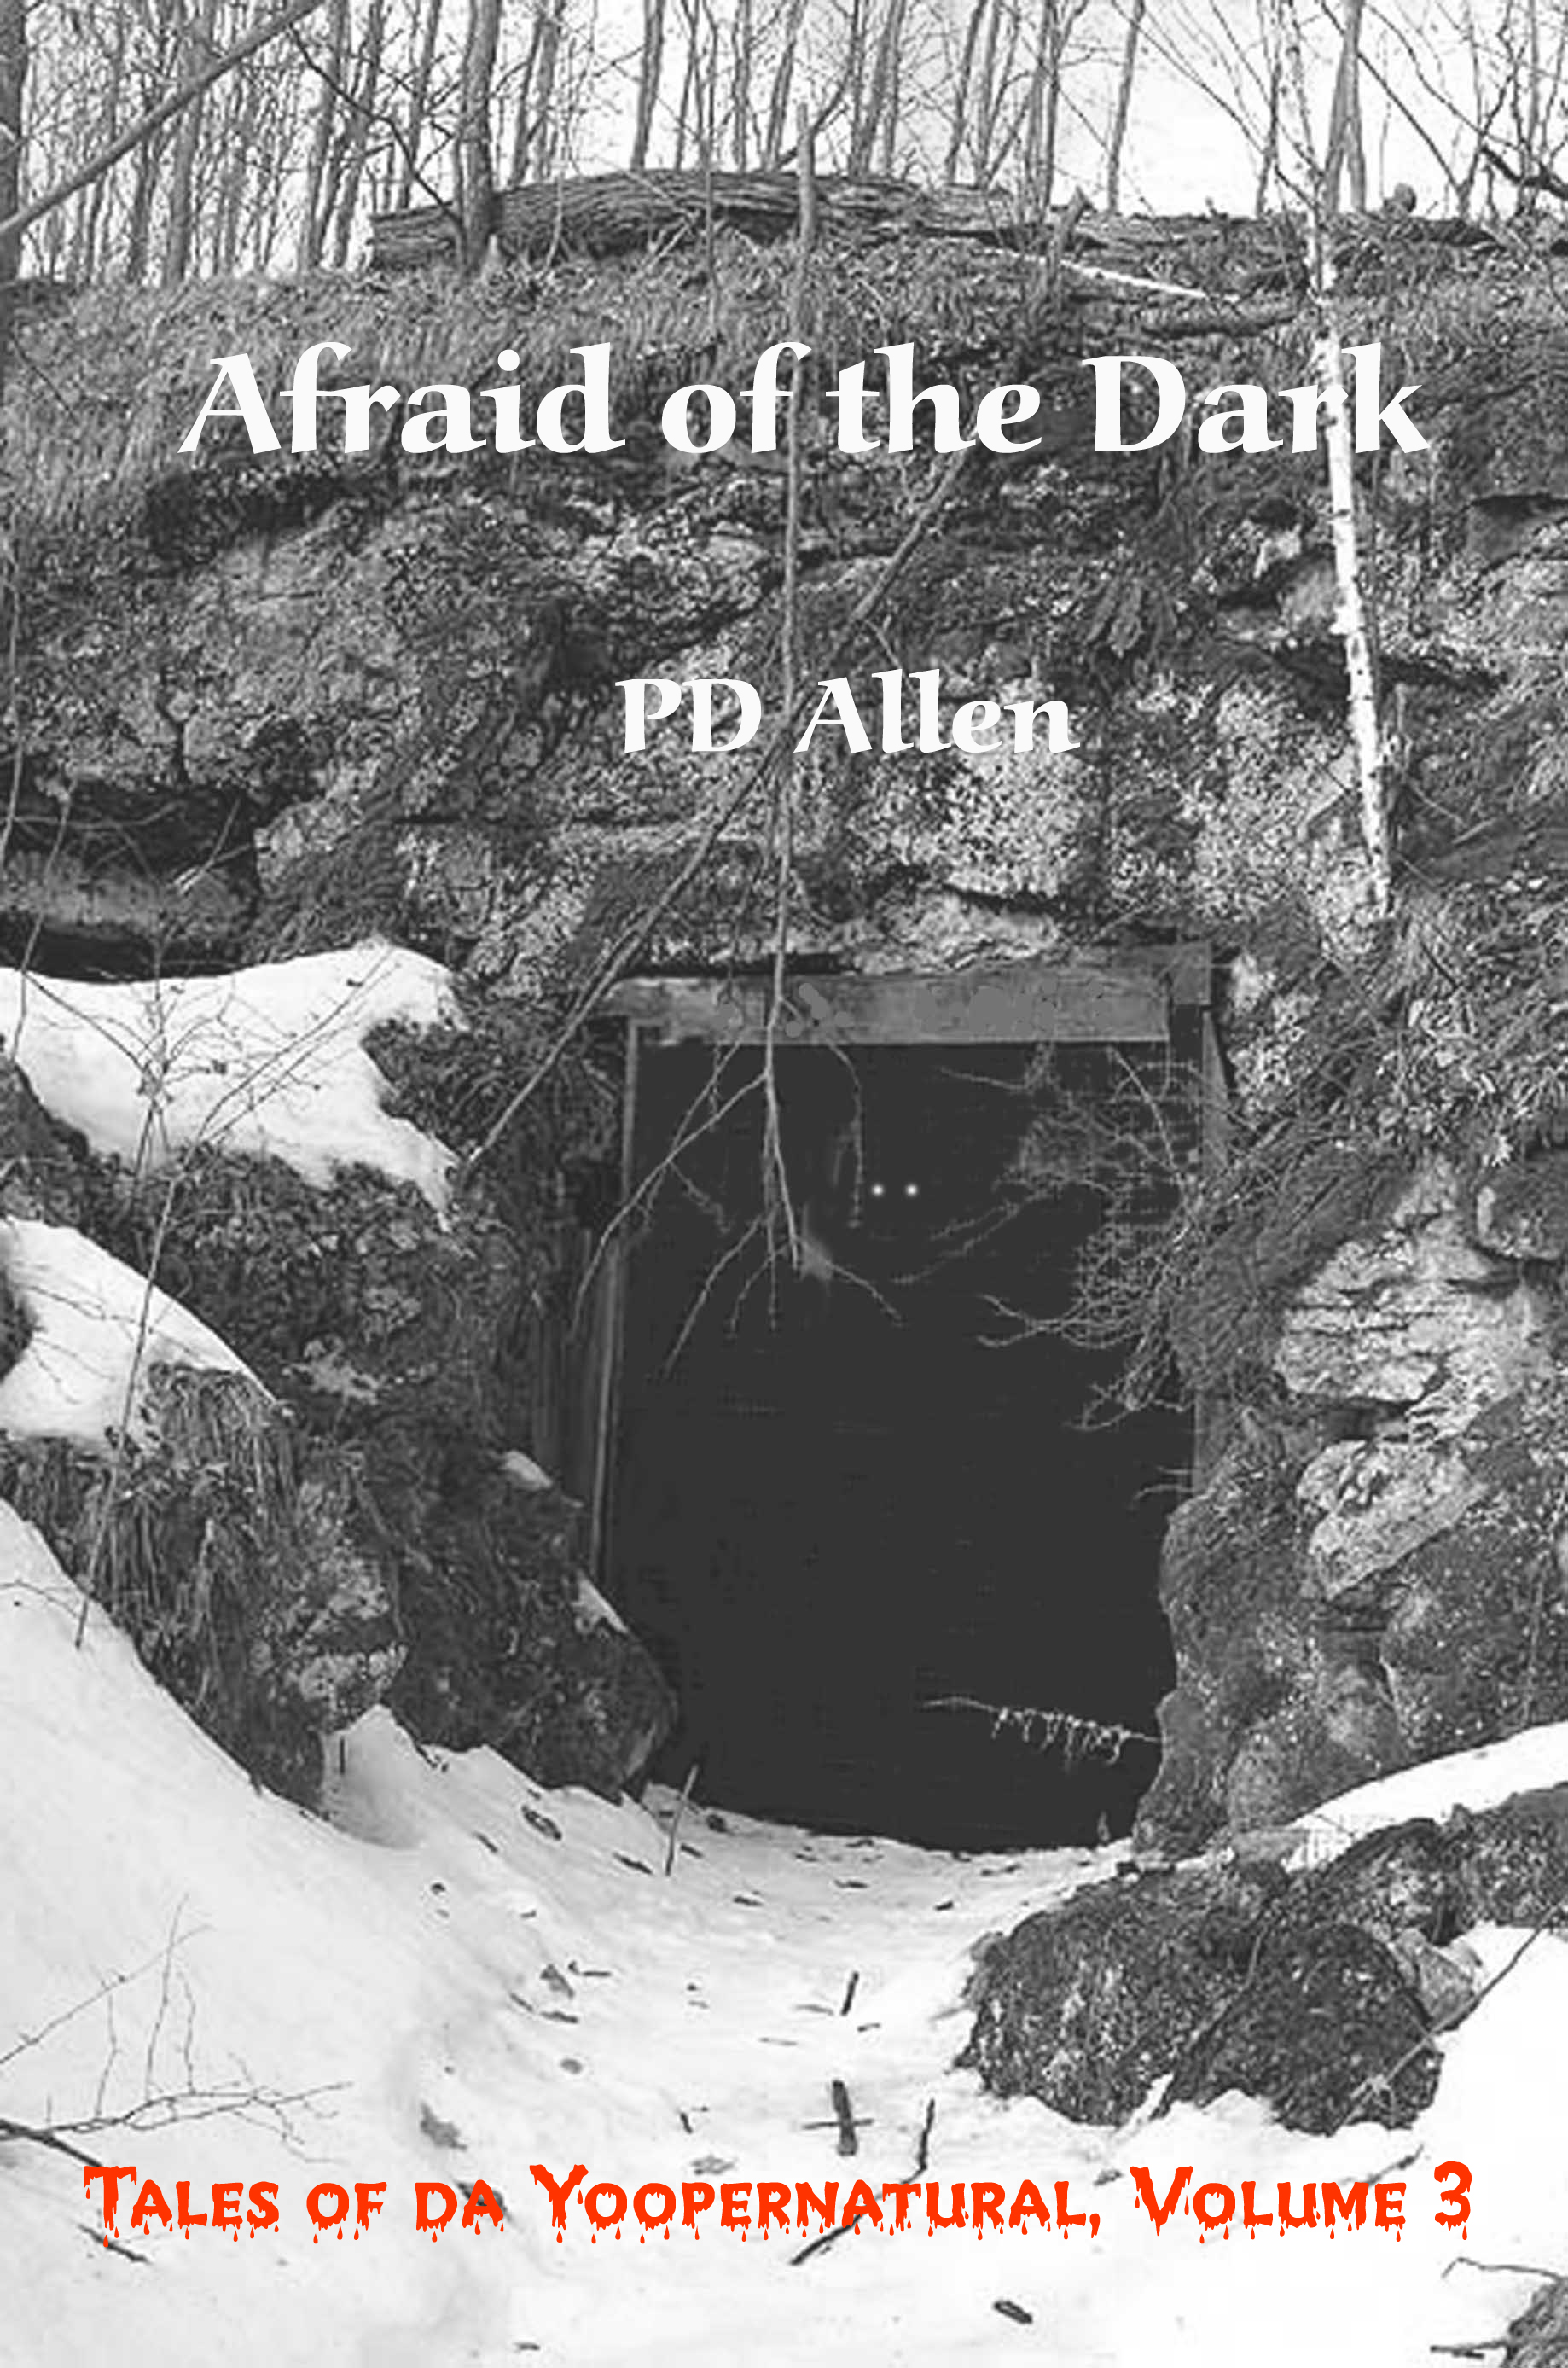 Afriad of the Dark; tales of da Yoopernatural, Volume 3